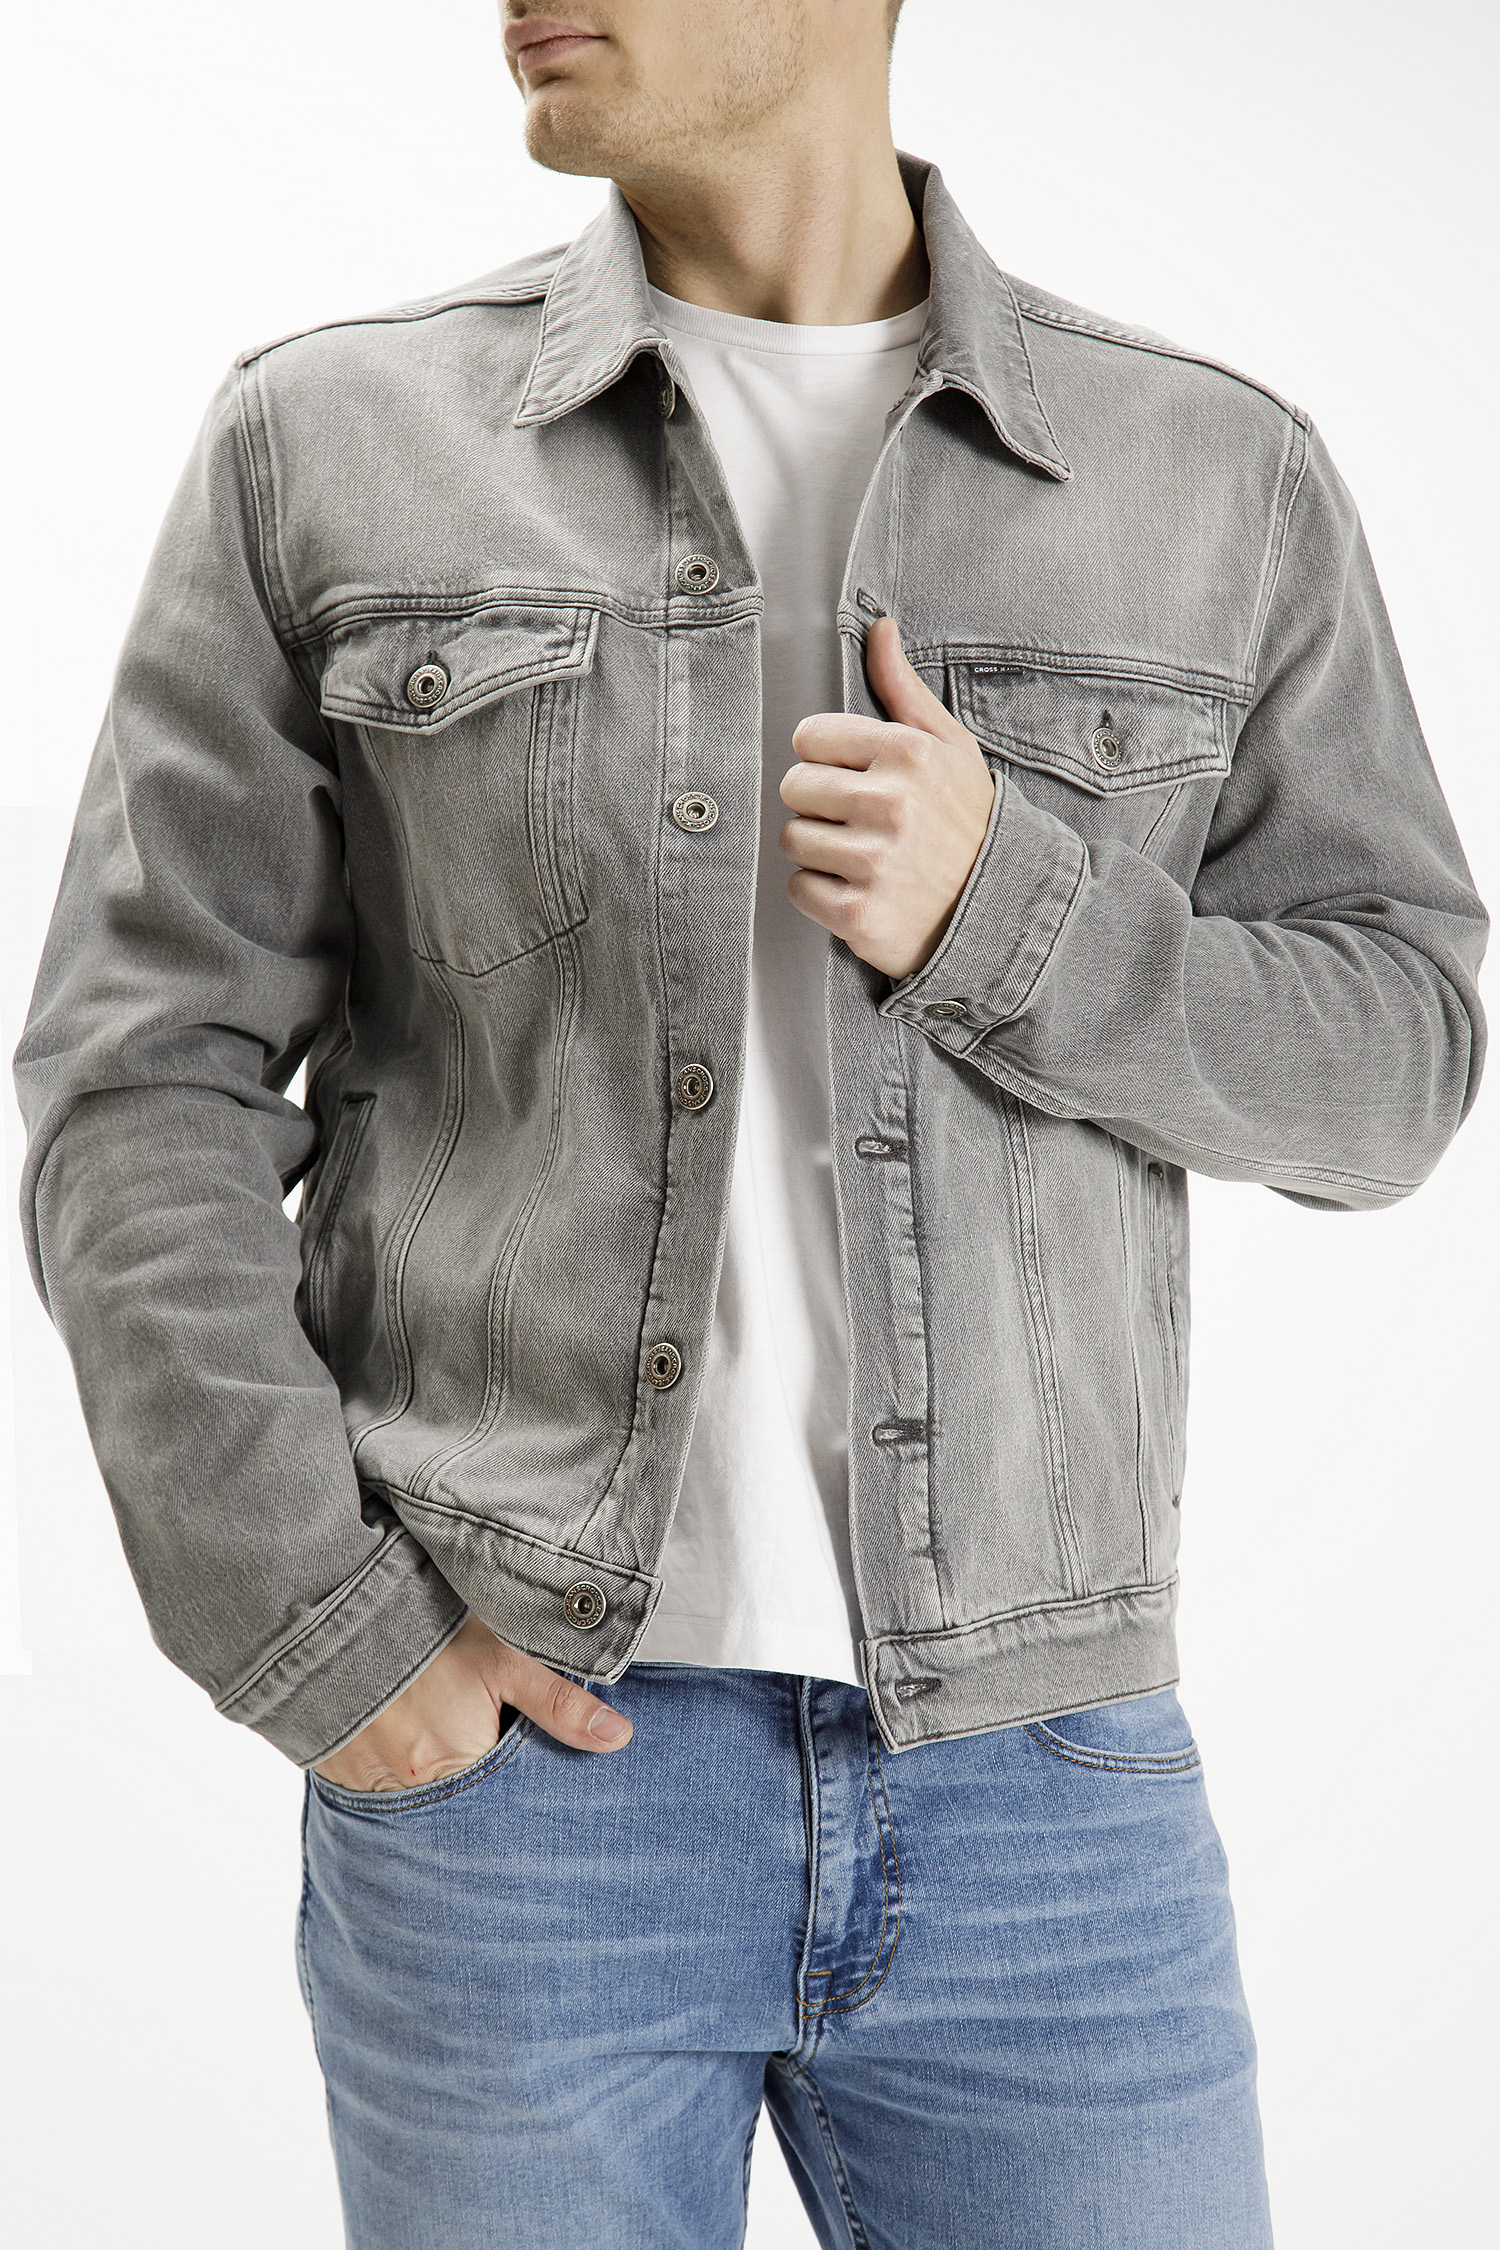 Куртка Cross Jeans для мужчин, A 320-005, размер XXL, серая